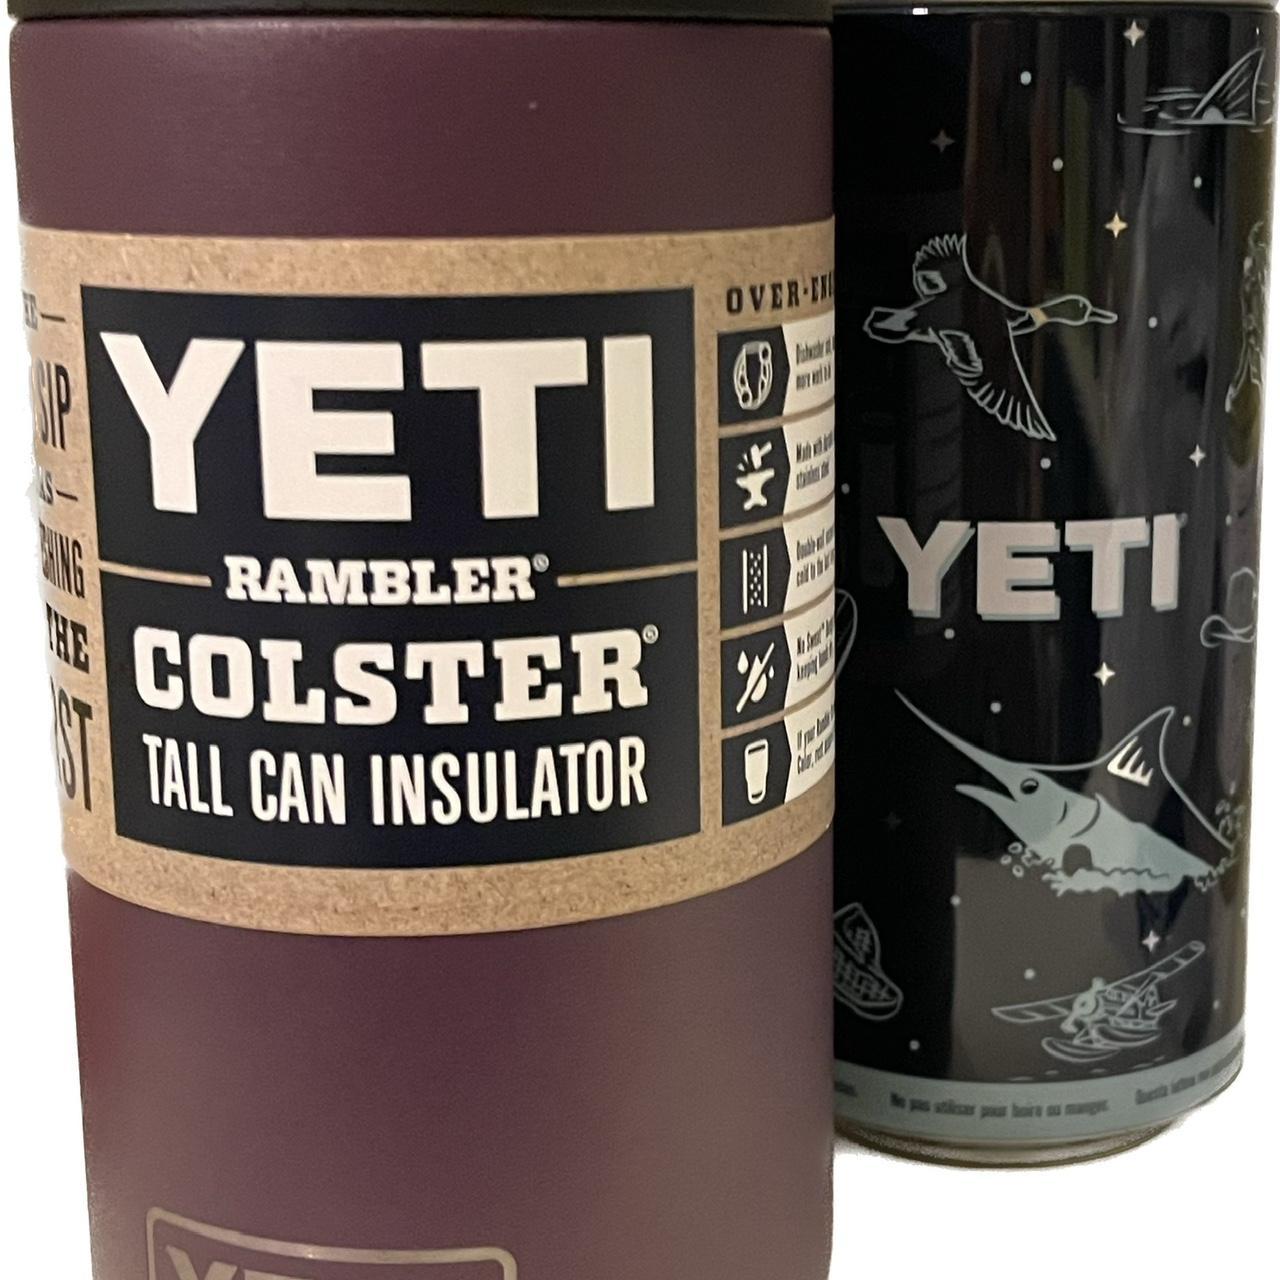 NEW YETI Rambler 16oz Colster Tall Can Insulator - Depop